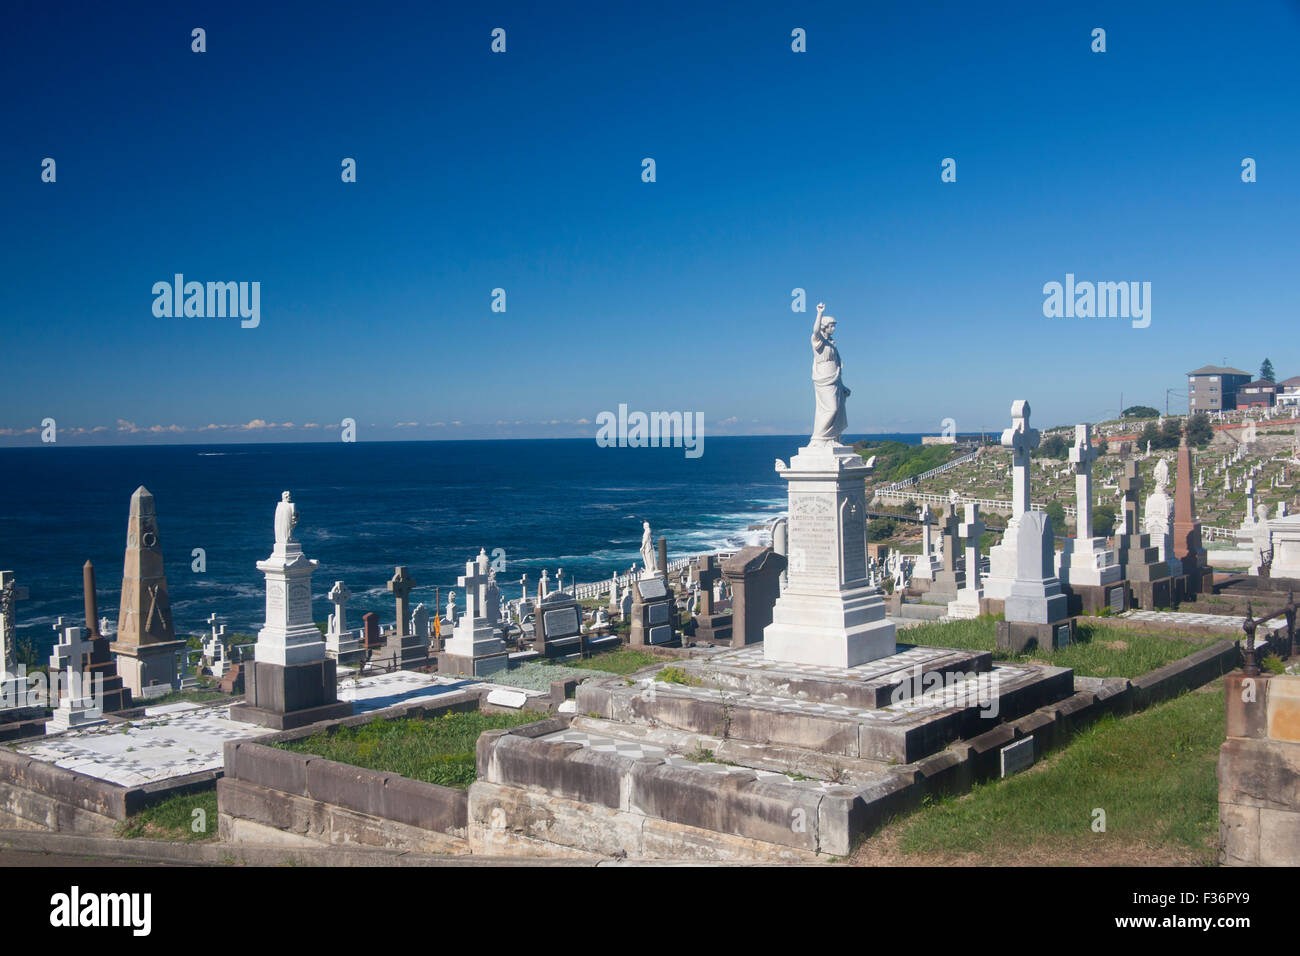 Waverley Friedhof Grabsteine, Denkmäler und Tasman Sea Pazifik Sydney New South Wales NSW Australia Stockfoto